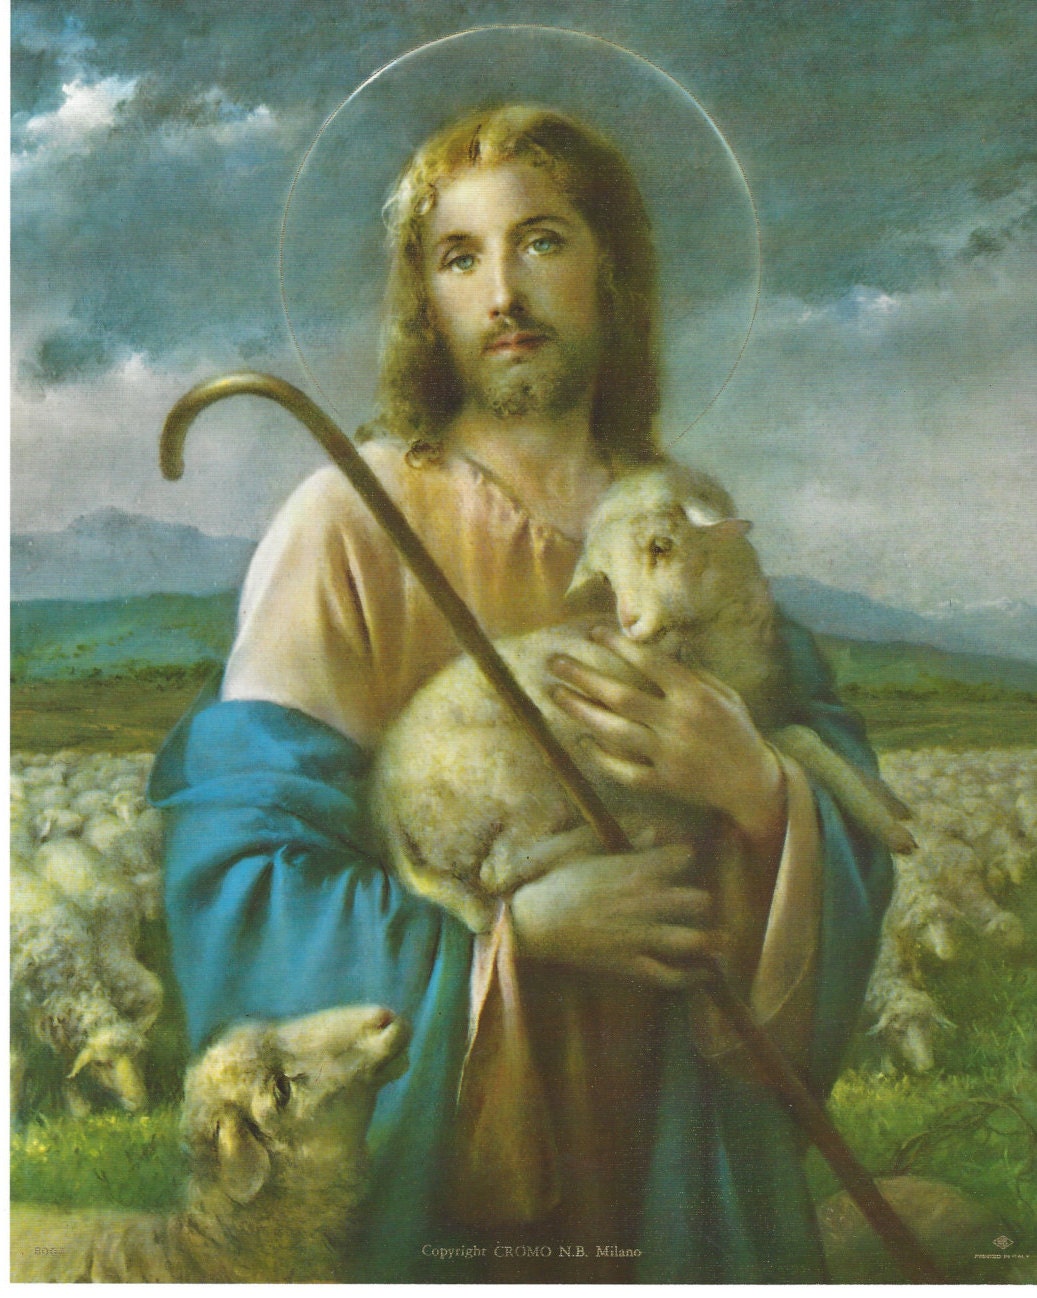 Иисус пастырь. Эстебан Мурильо добрый Пастырь. Бартоломео Эстебан Мурильо добрый Пастырь. Иисус Христос Агнец икона. Икона Иисус Христос Агнец Божий.